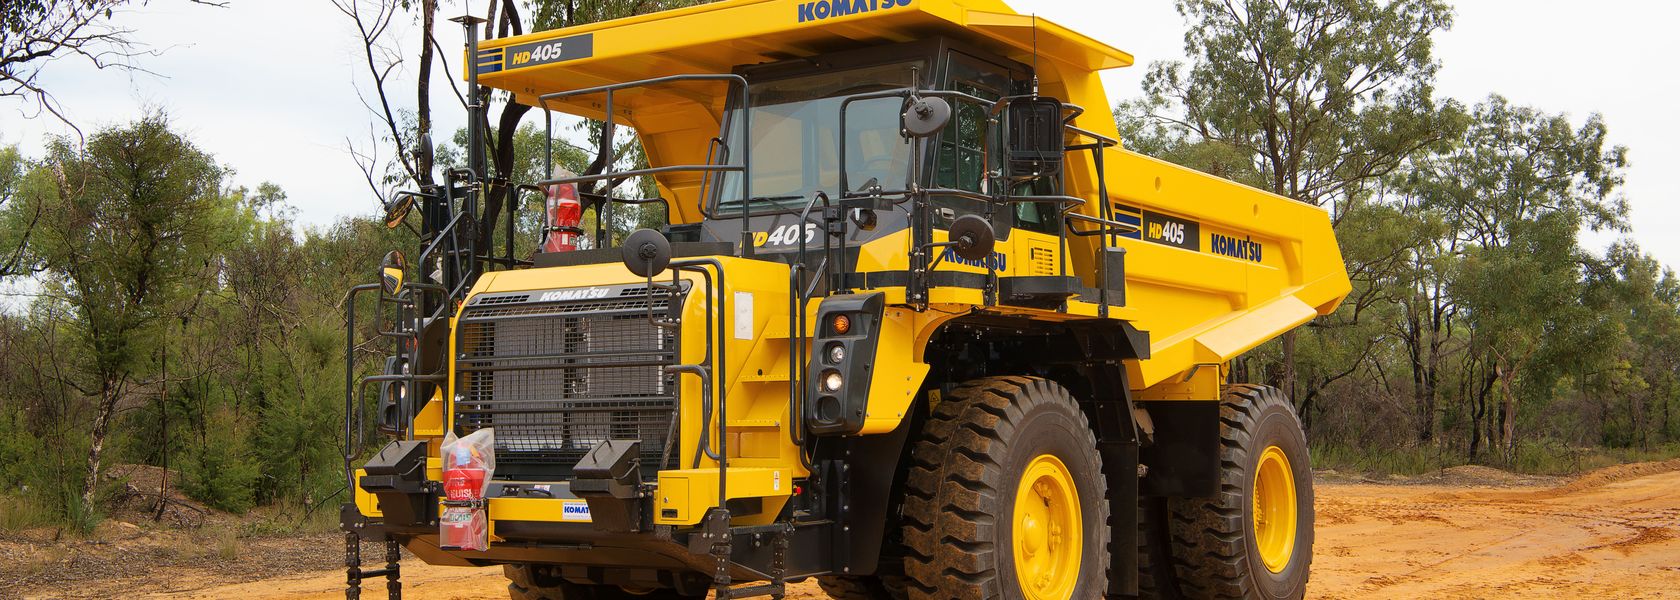 Komatsu adds low-emission engines to dump trucks